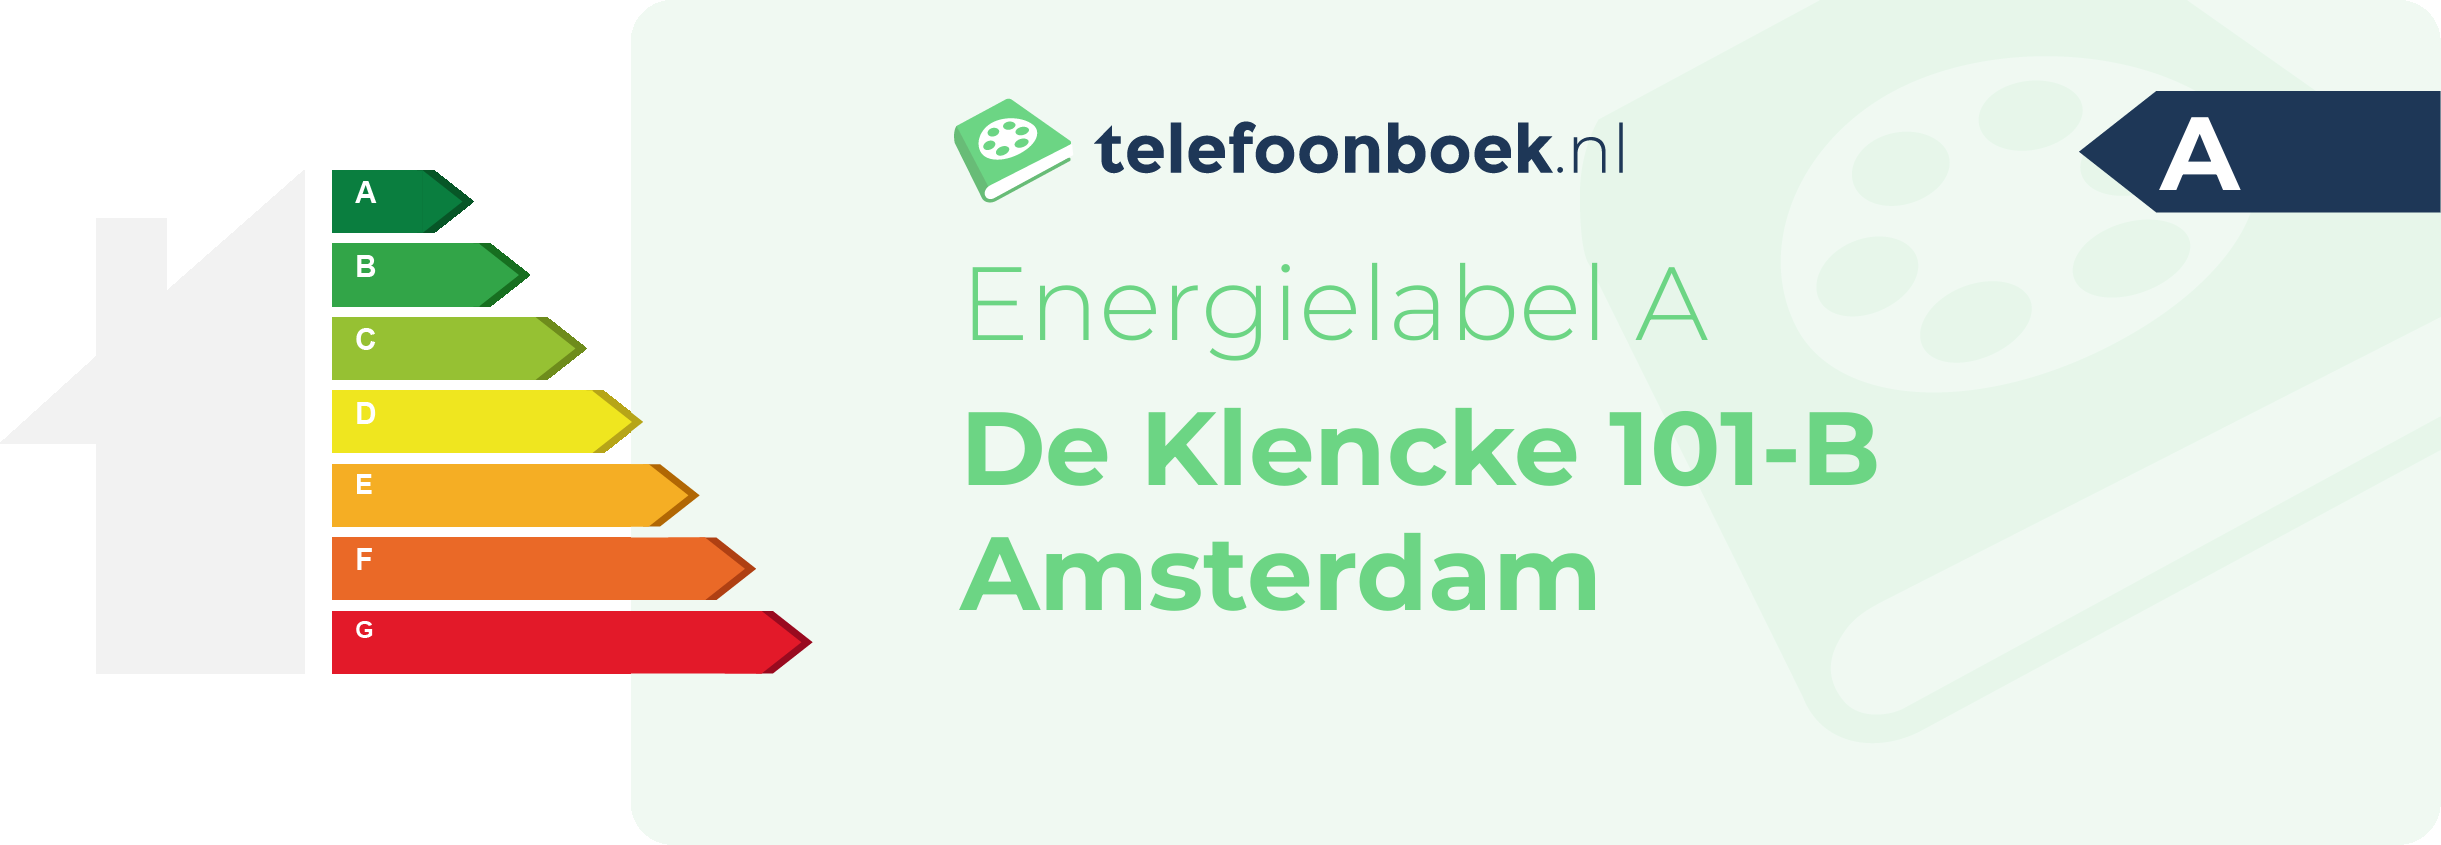 Energielabel De Klencke 101-B Amsterdam